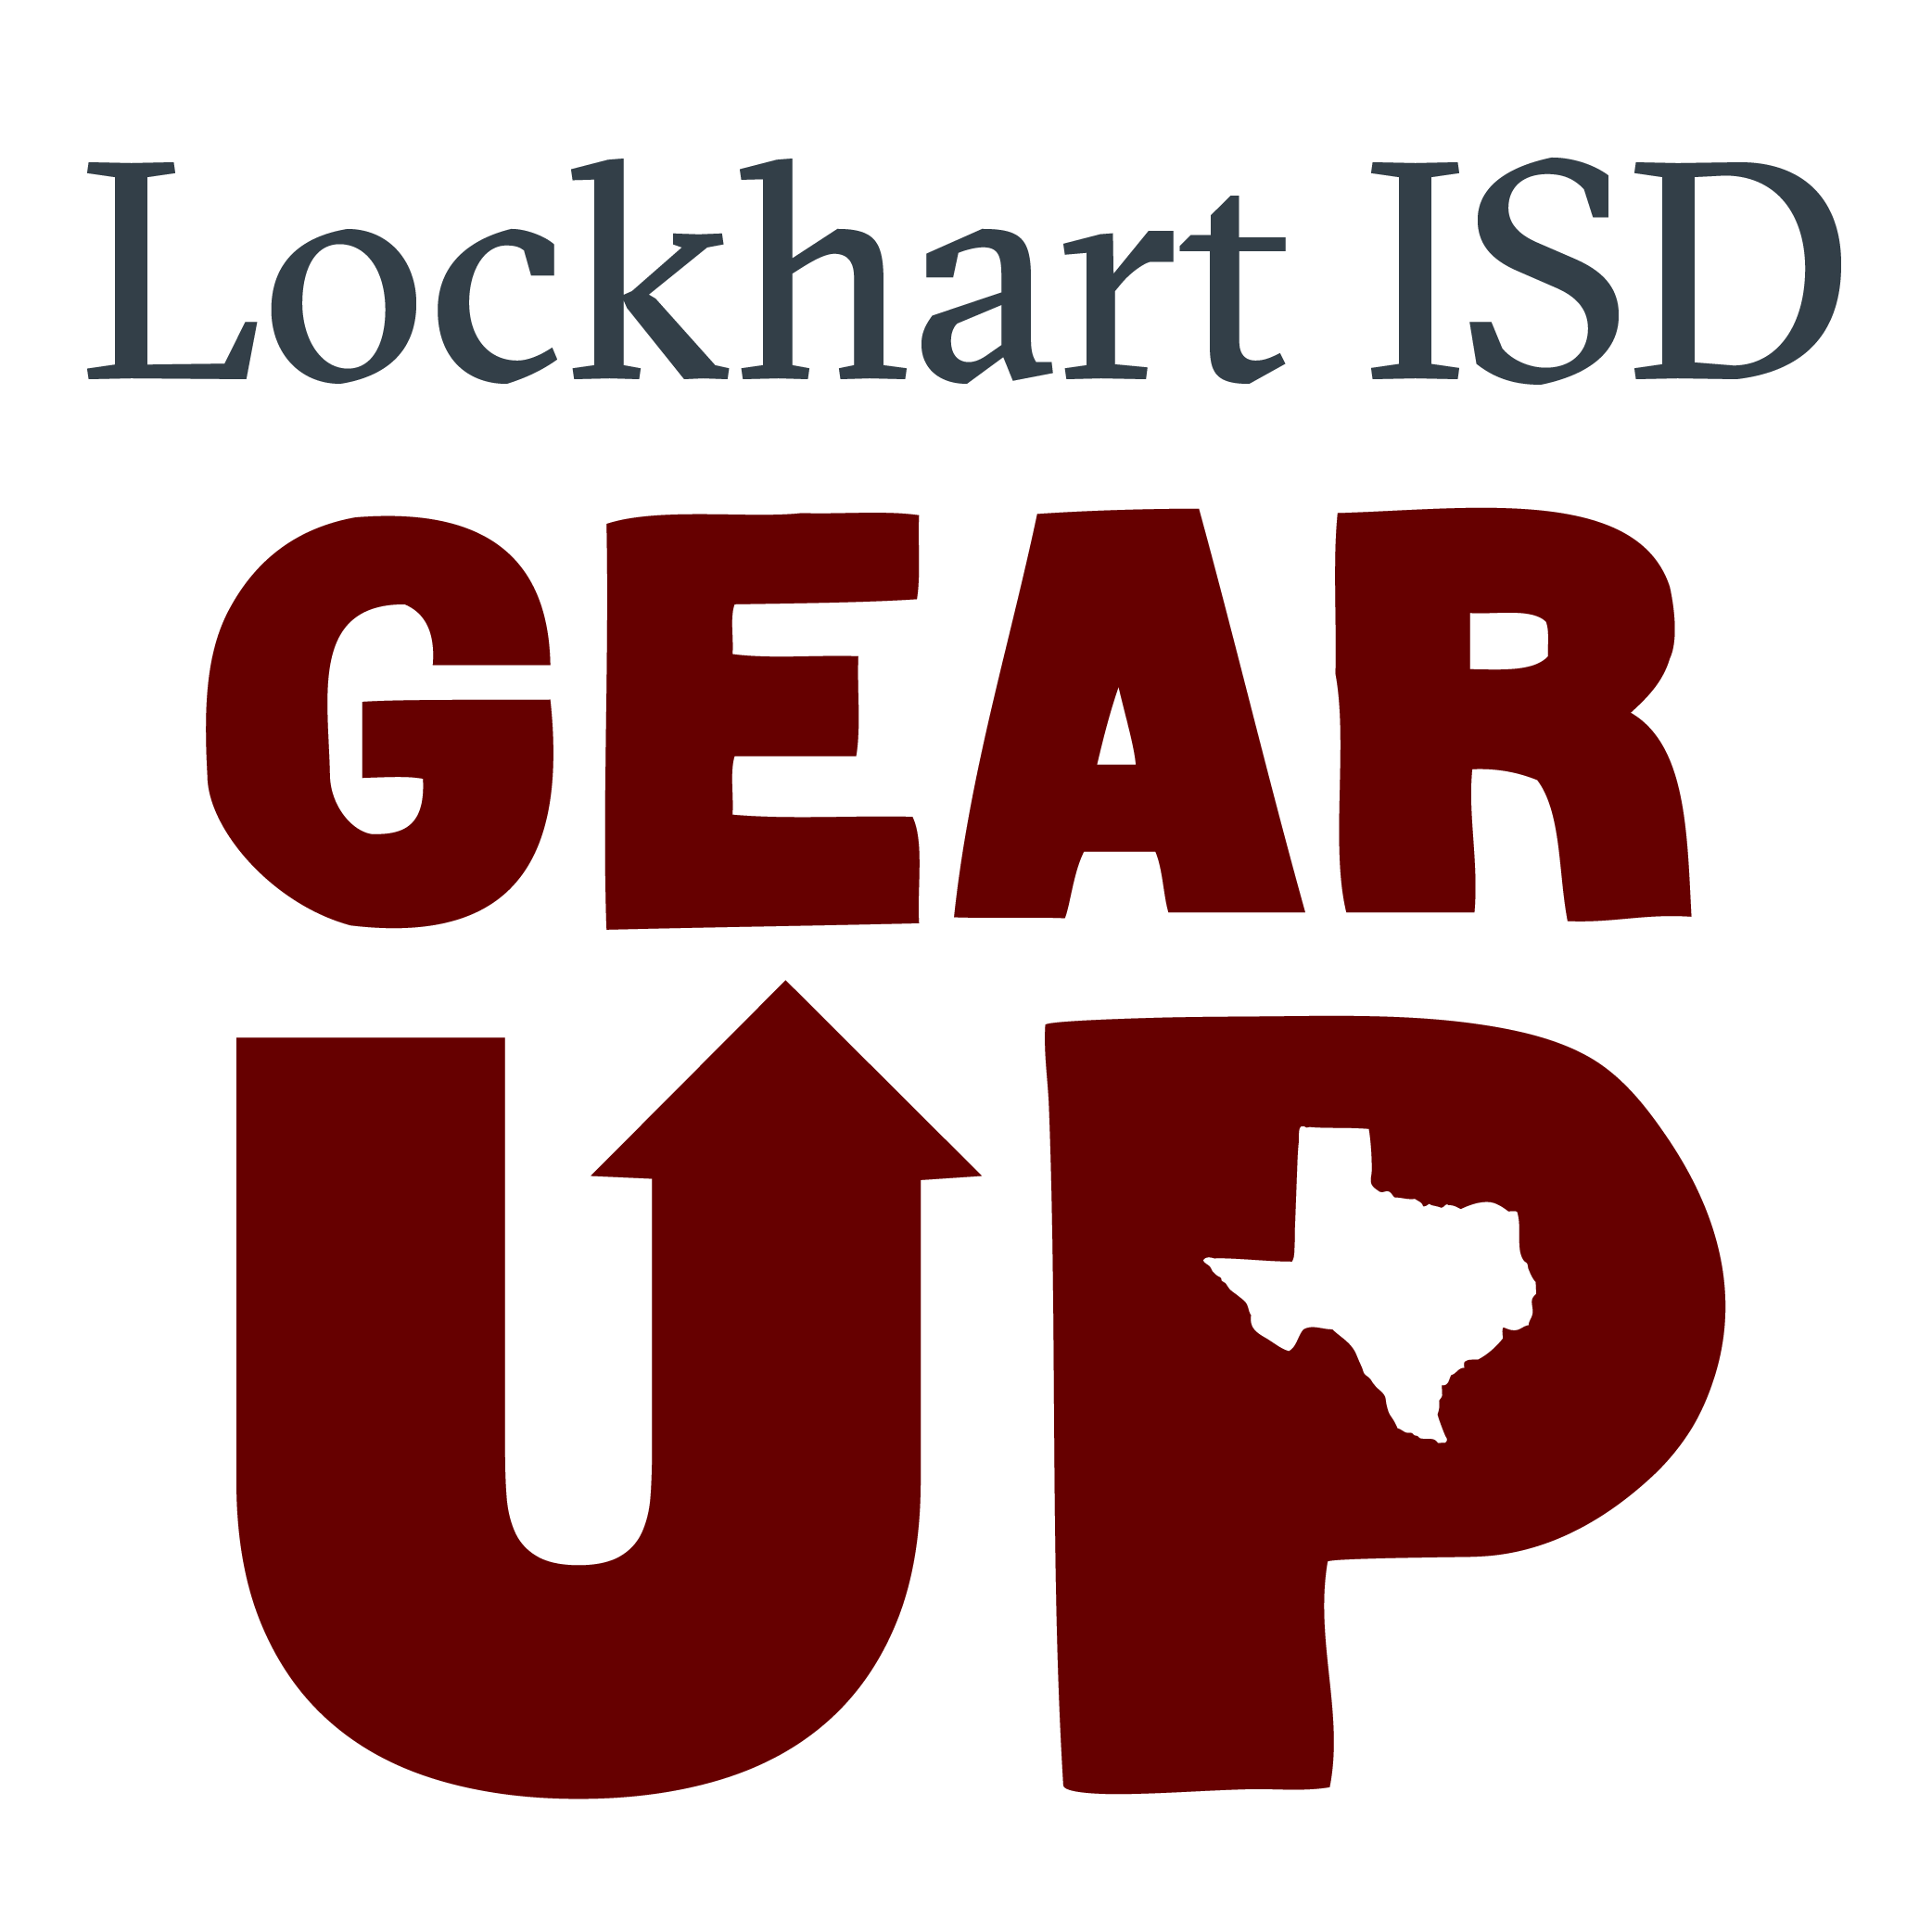 Lockhart ISD GEAR UP logo